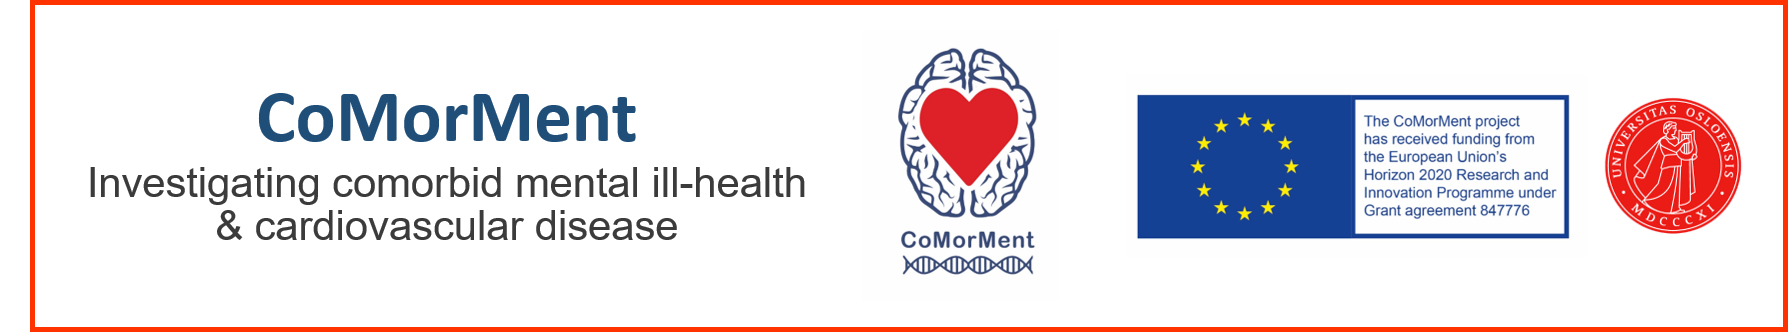 CoMorMent, EC and University of Oslo logo